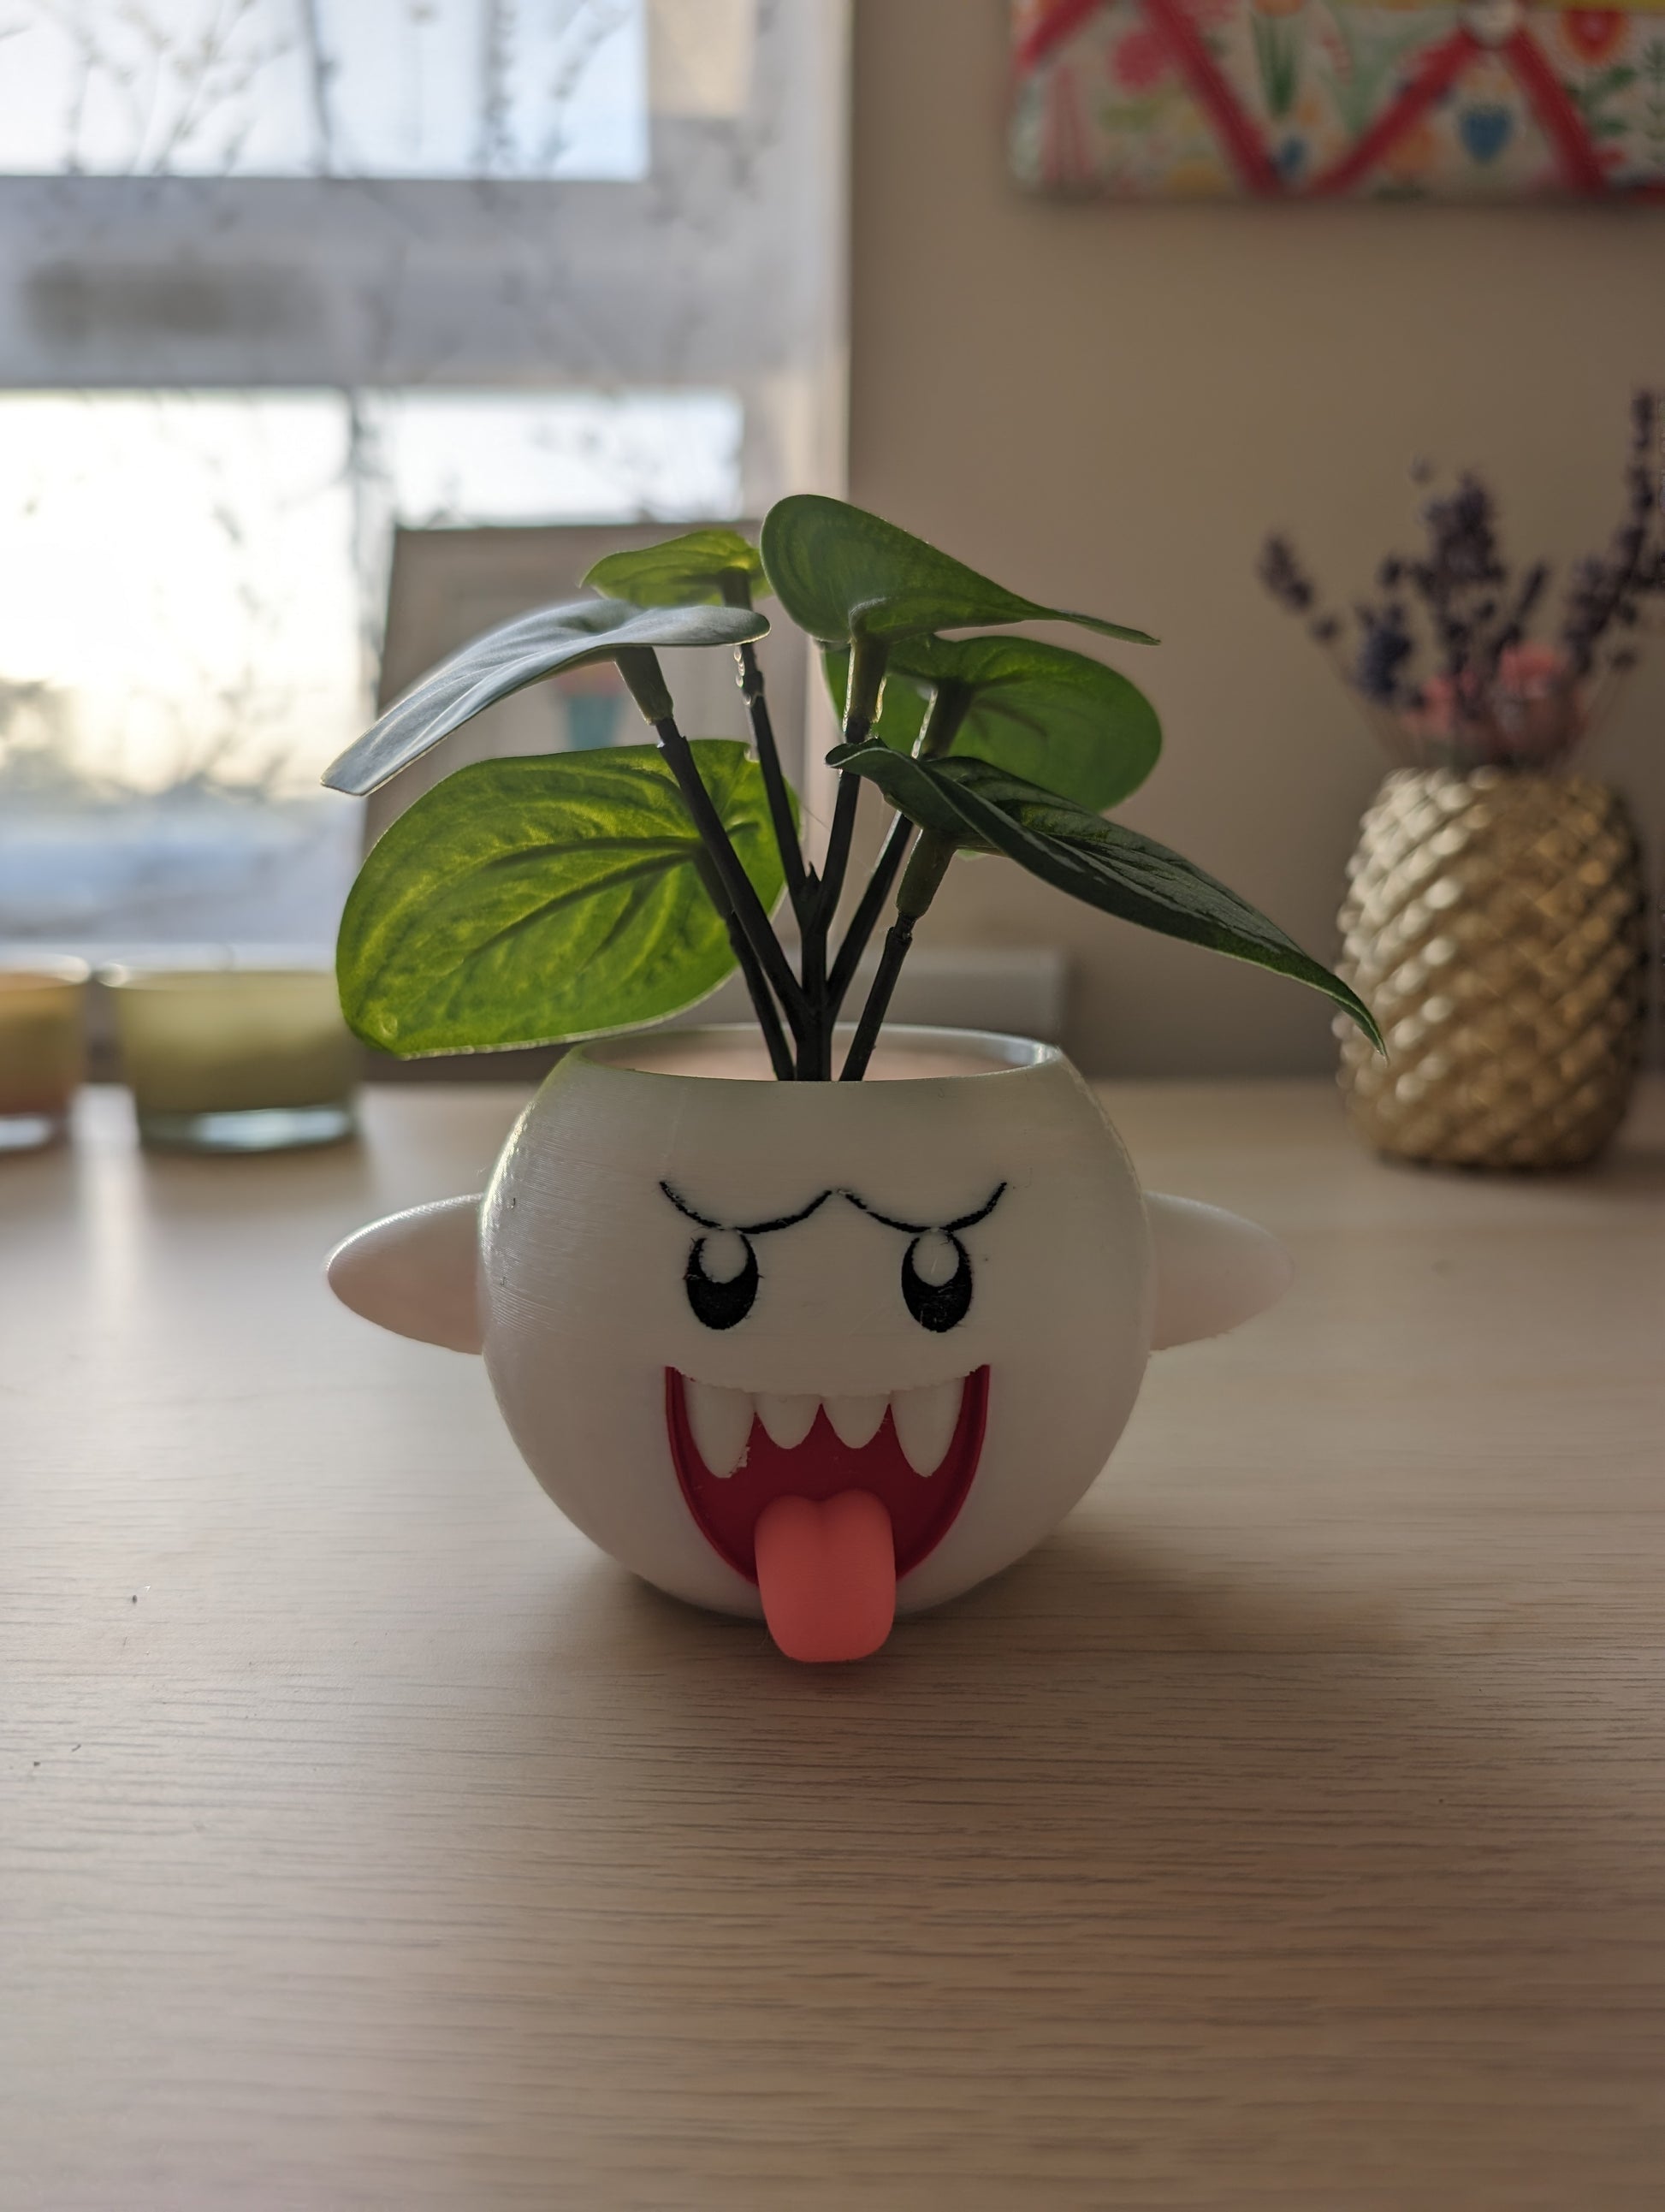 Small Mario Boo planter on desk